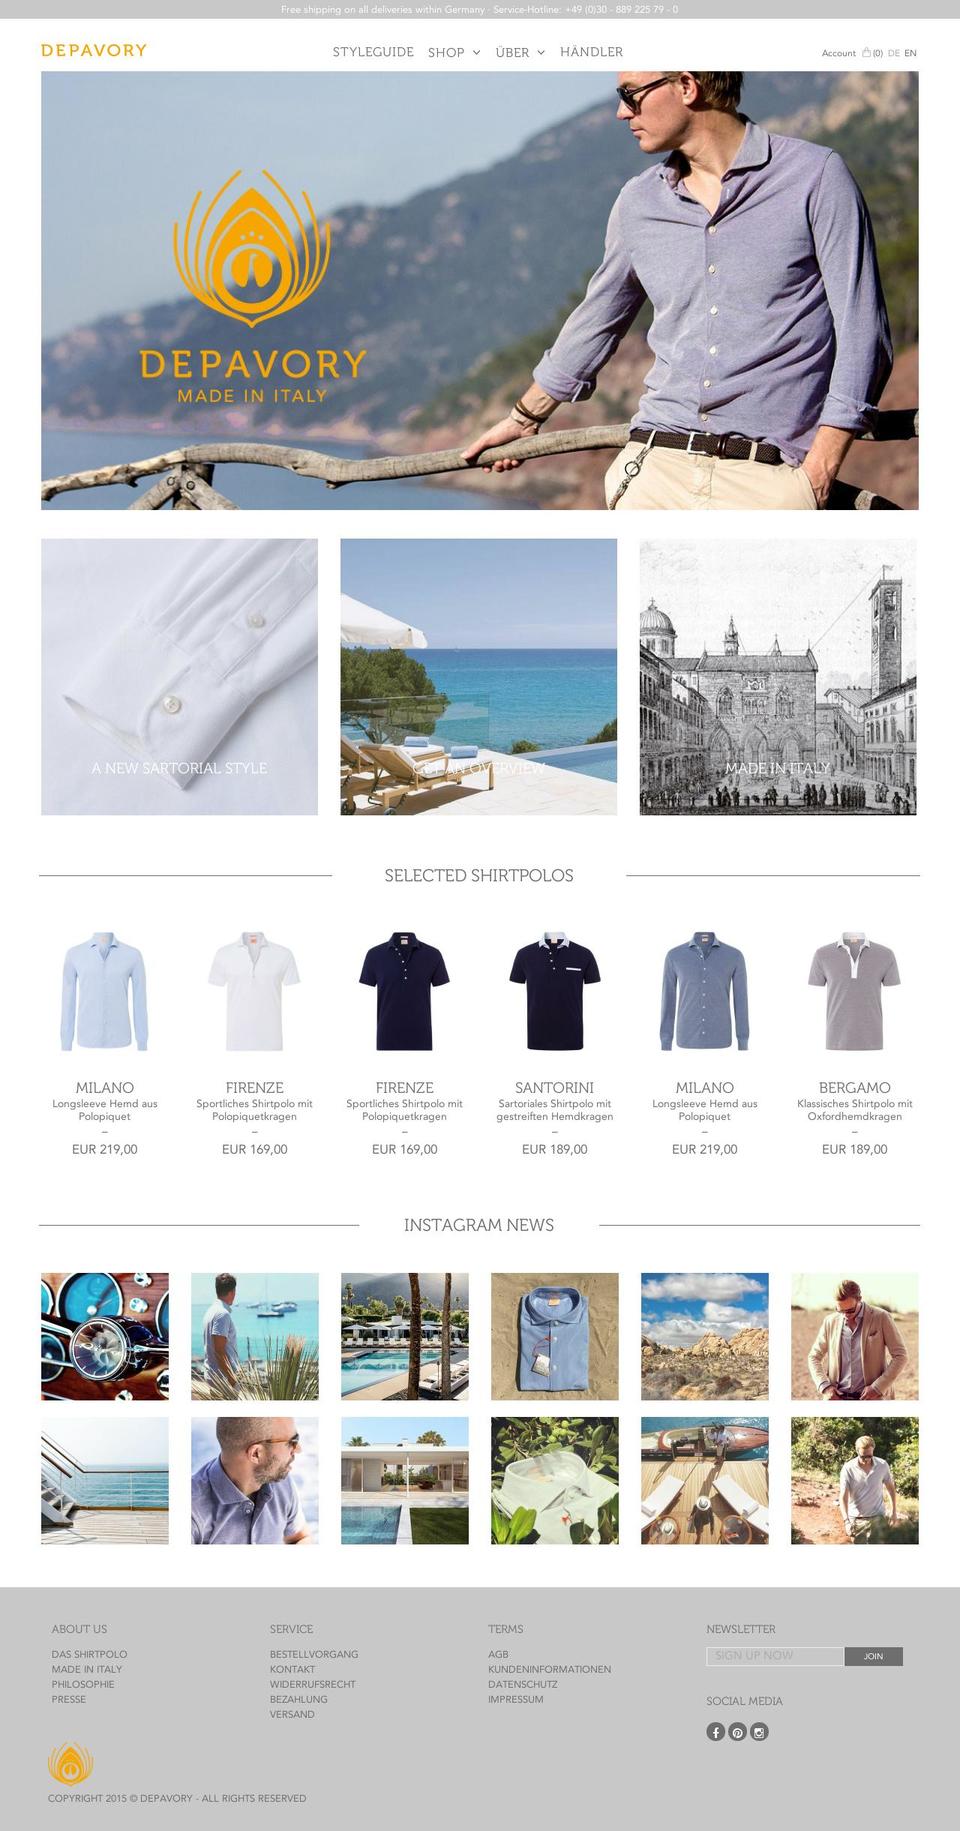 Depavory (2016-05-13) Shopify theme site example shirtpolo.de